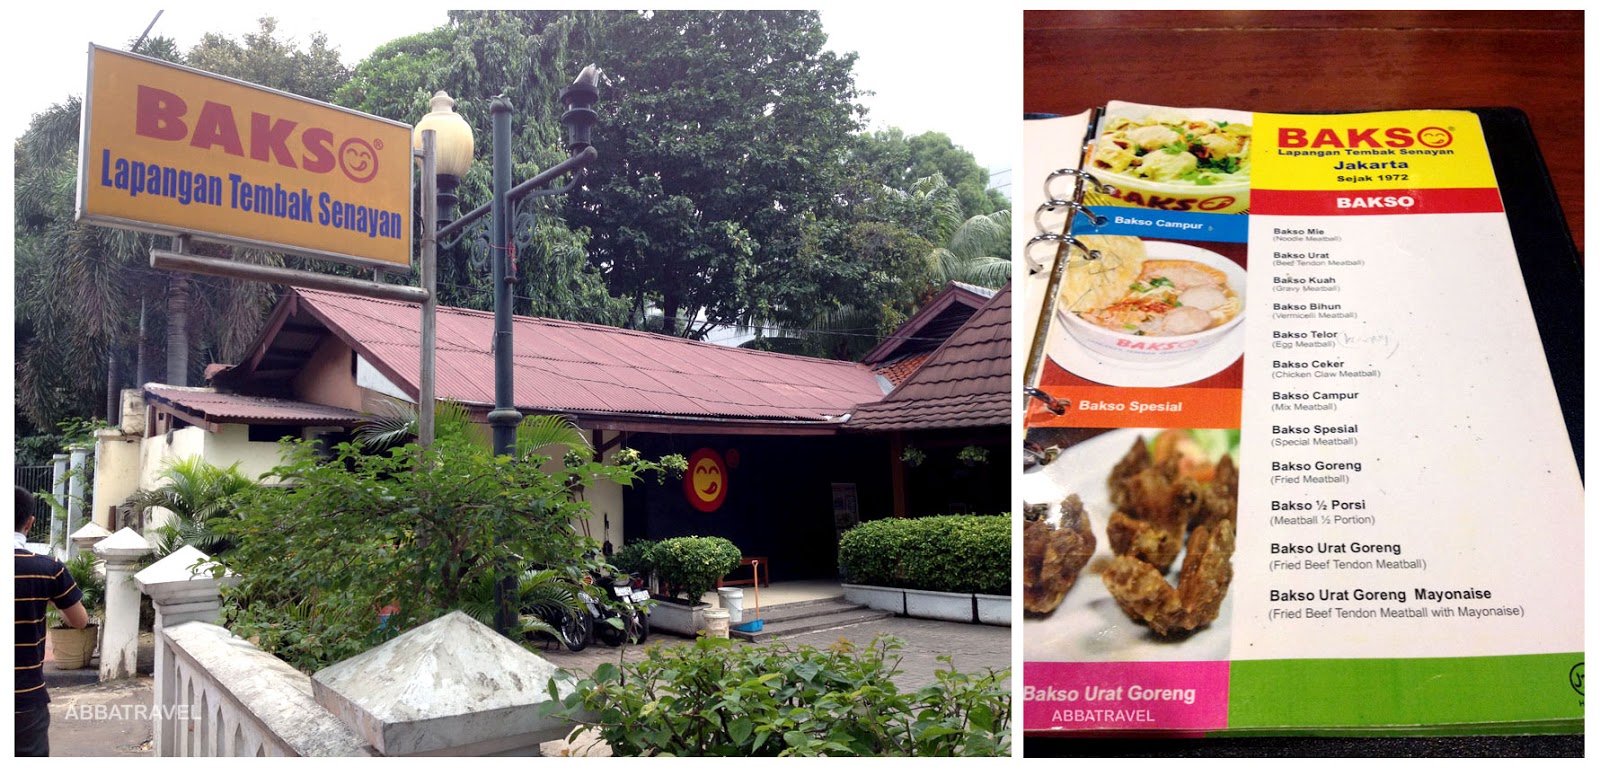 ABBATravel: Indonesia, Jakarta - To Eat